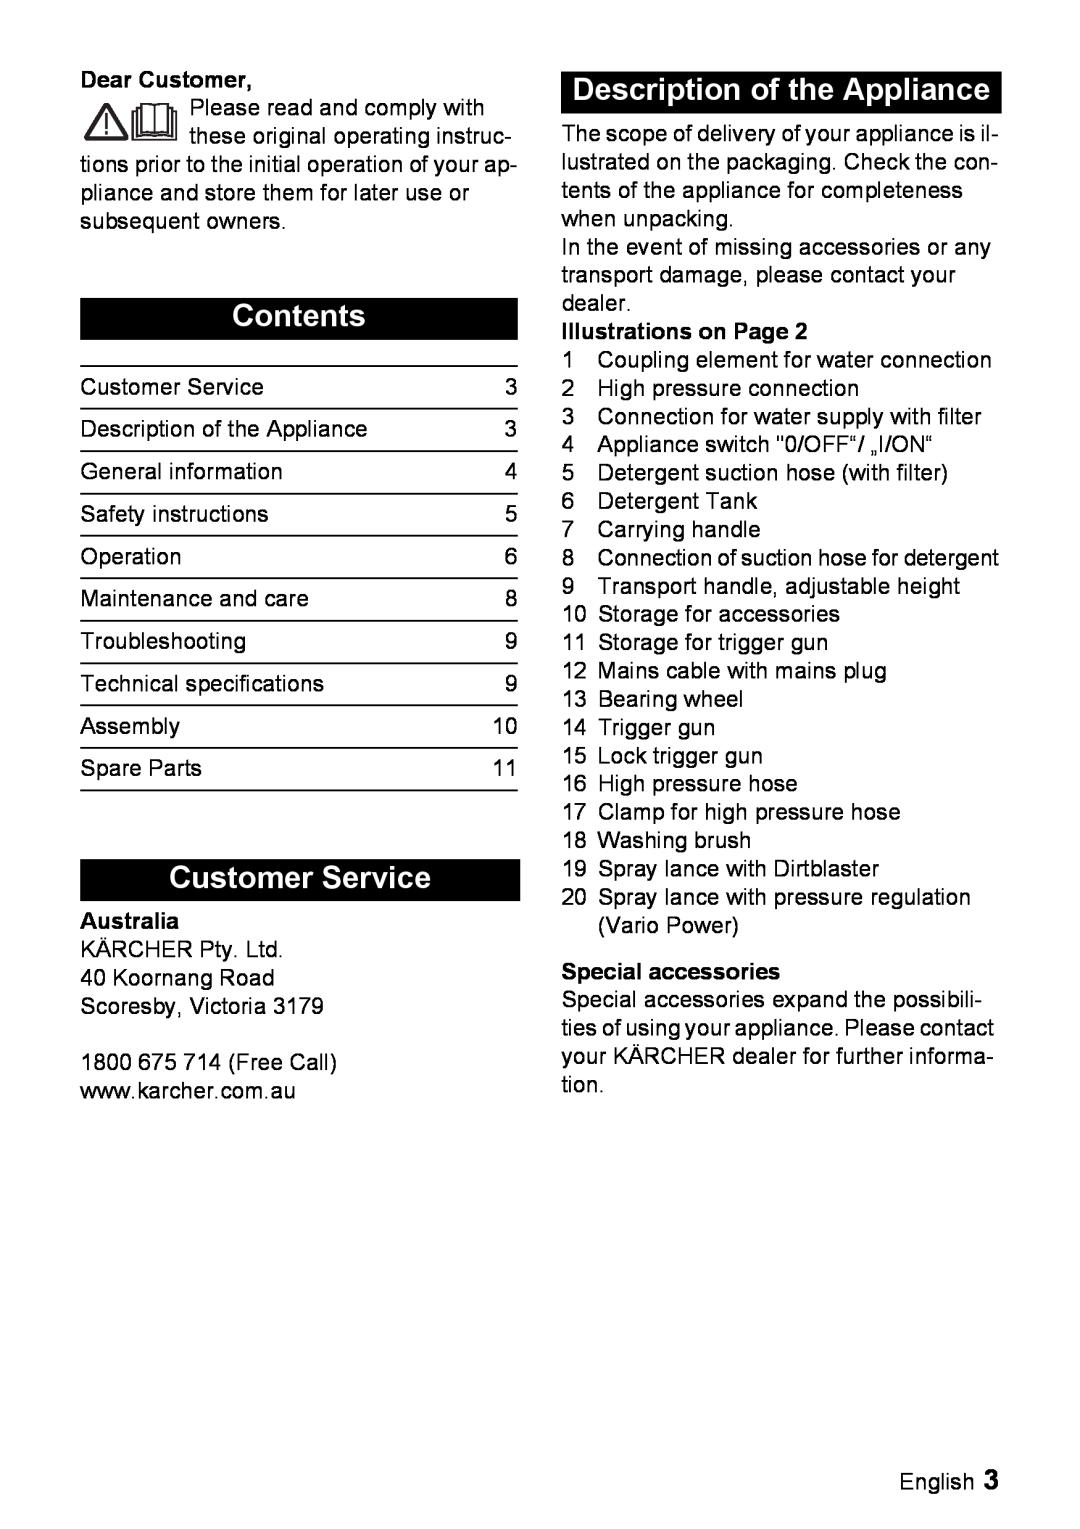 Karcher K 2.91 M Contents, Customer Service, Description of the Appliance, Australia, Illustrations on Page 